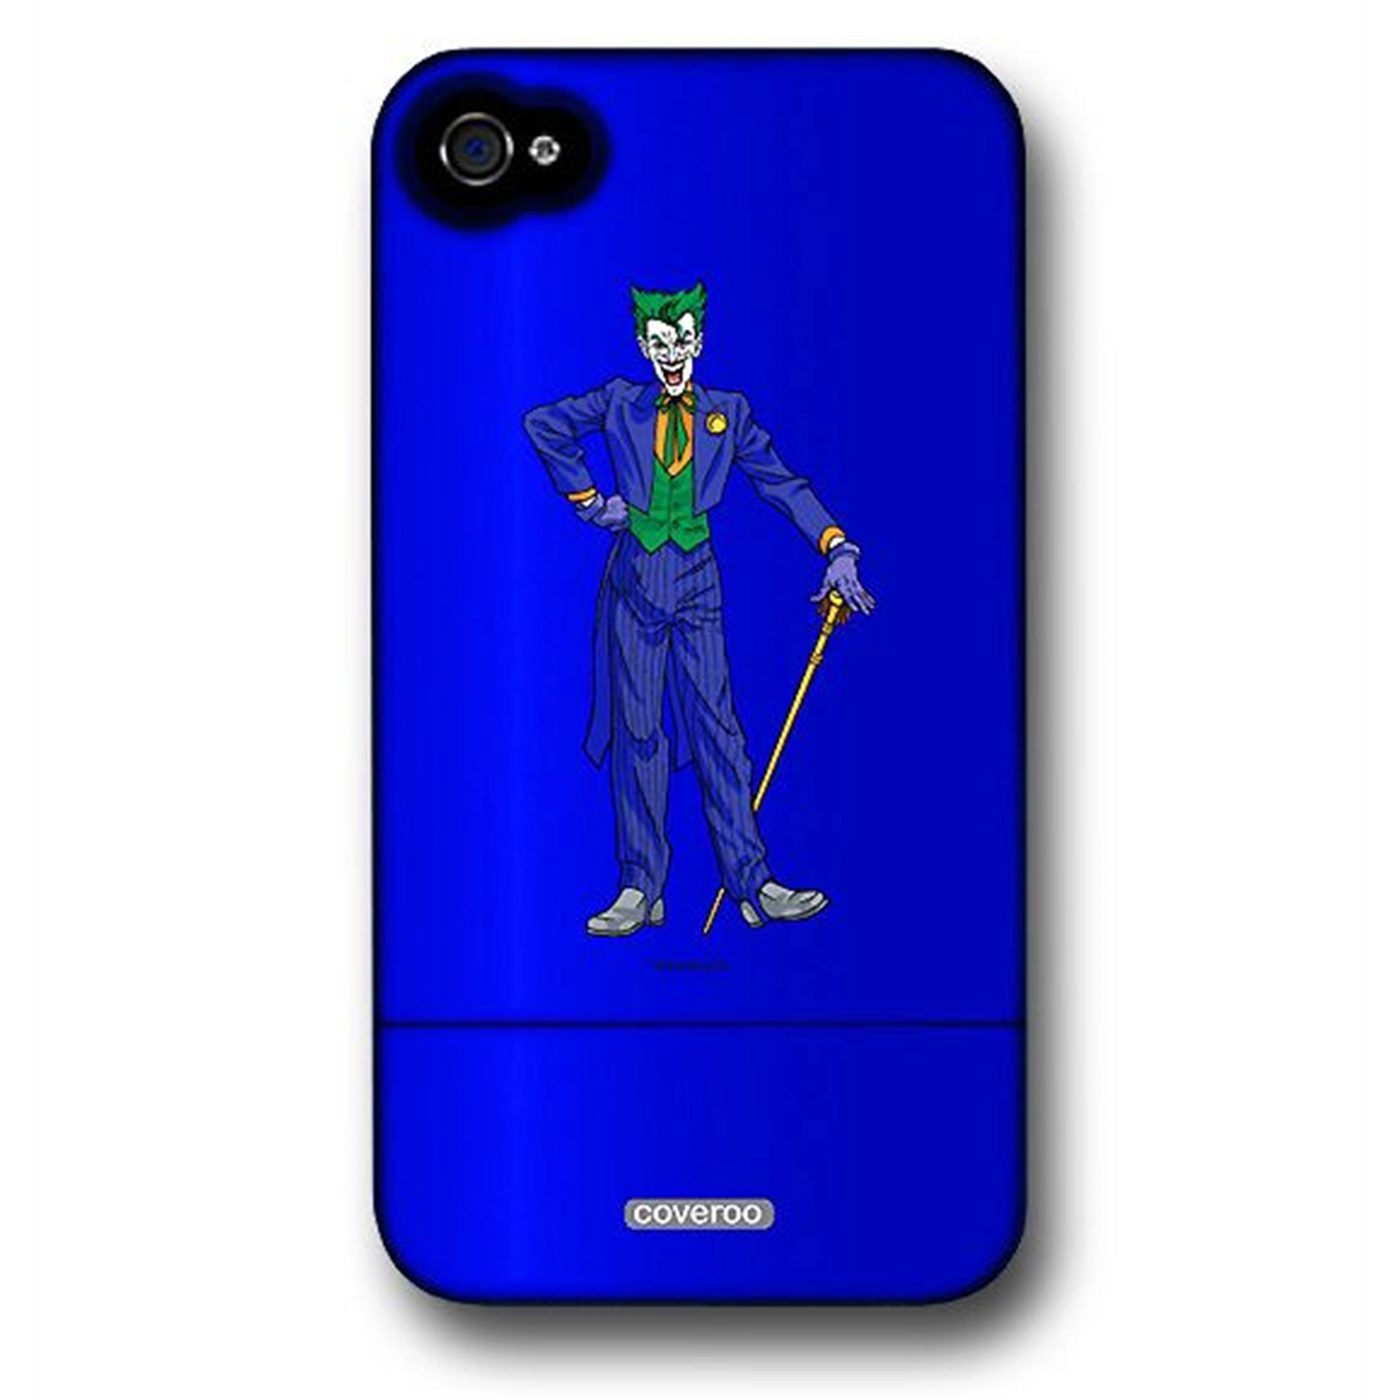 Joker With Cane iPhone 4 Slider Case